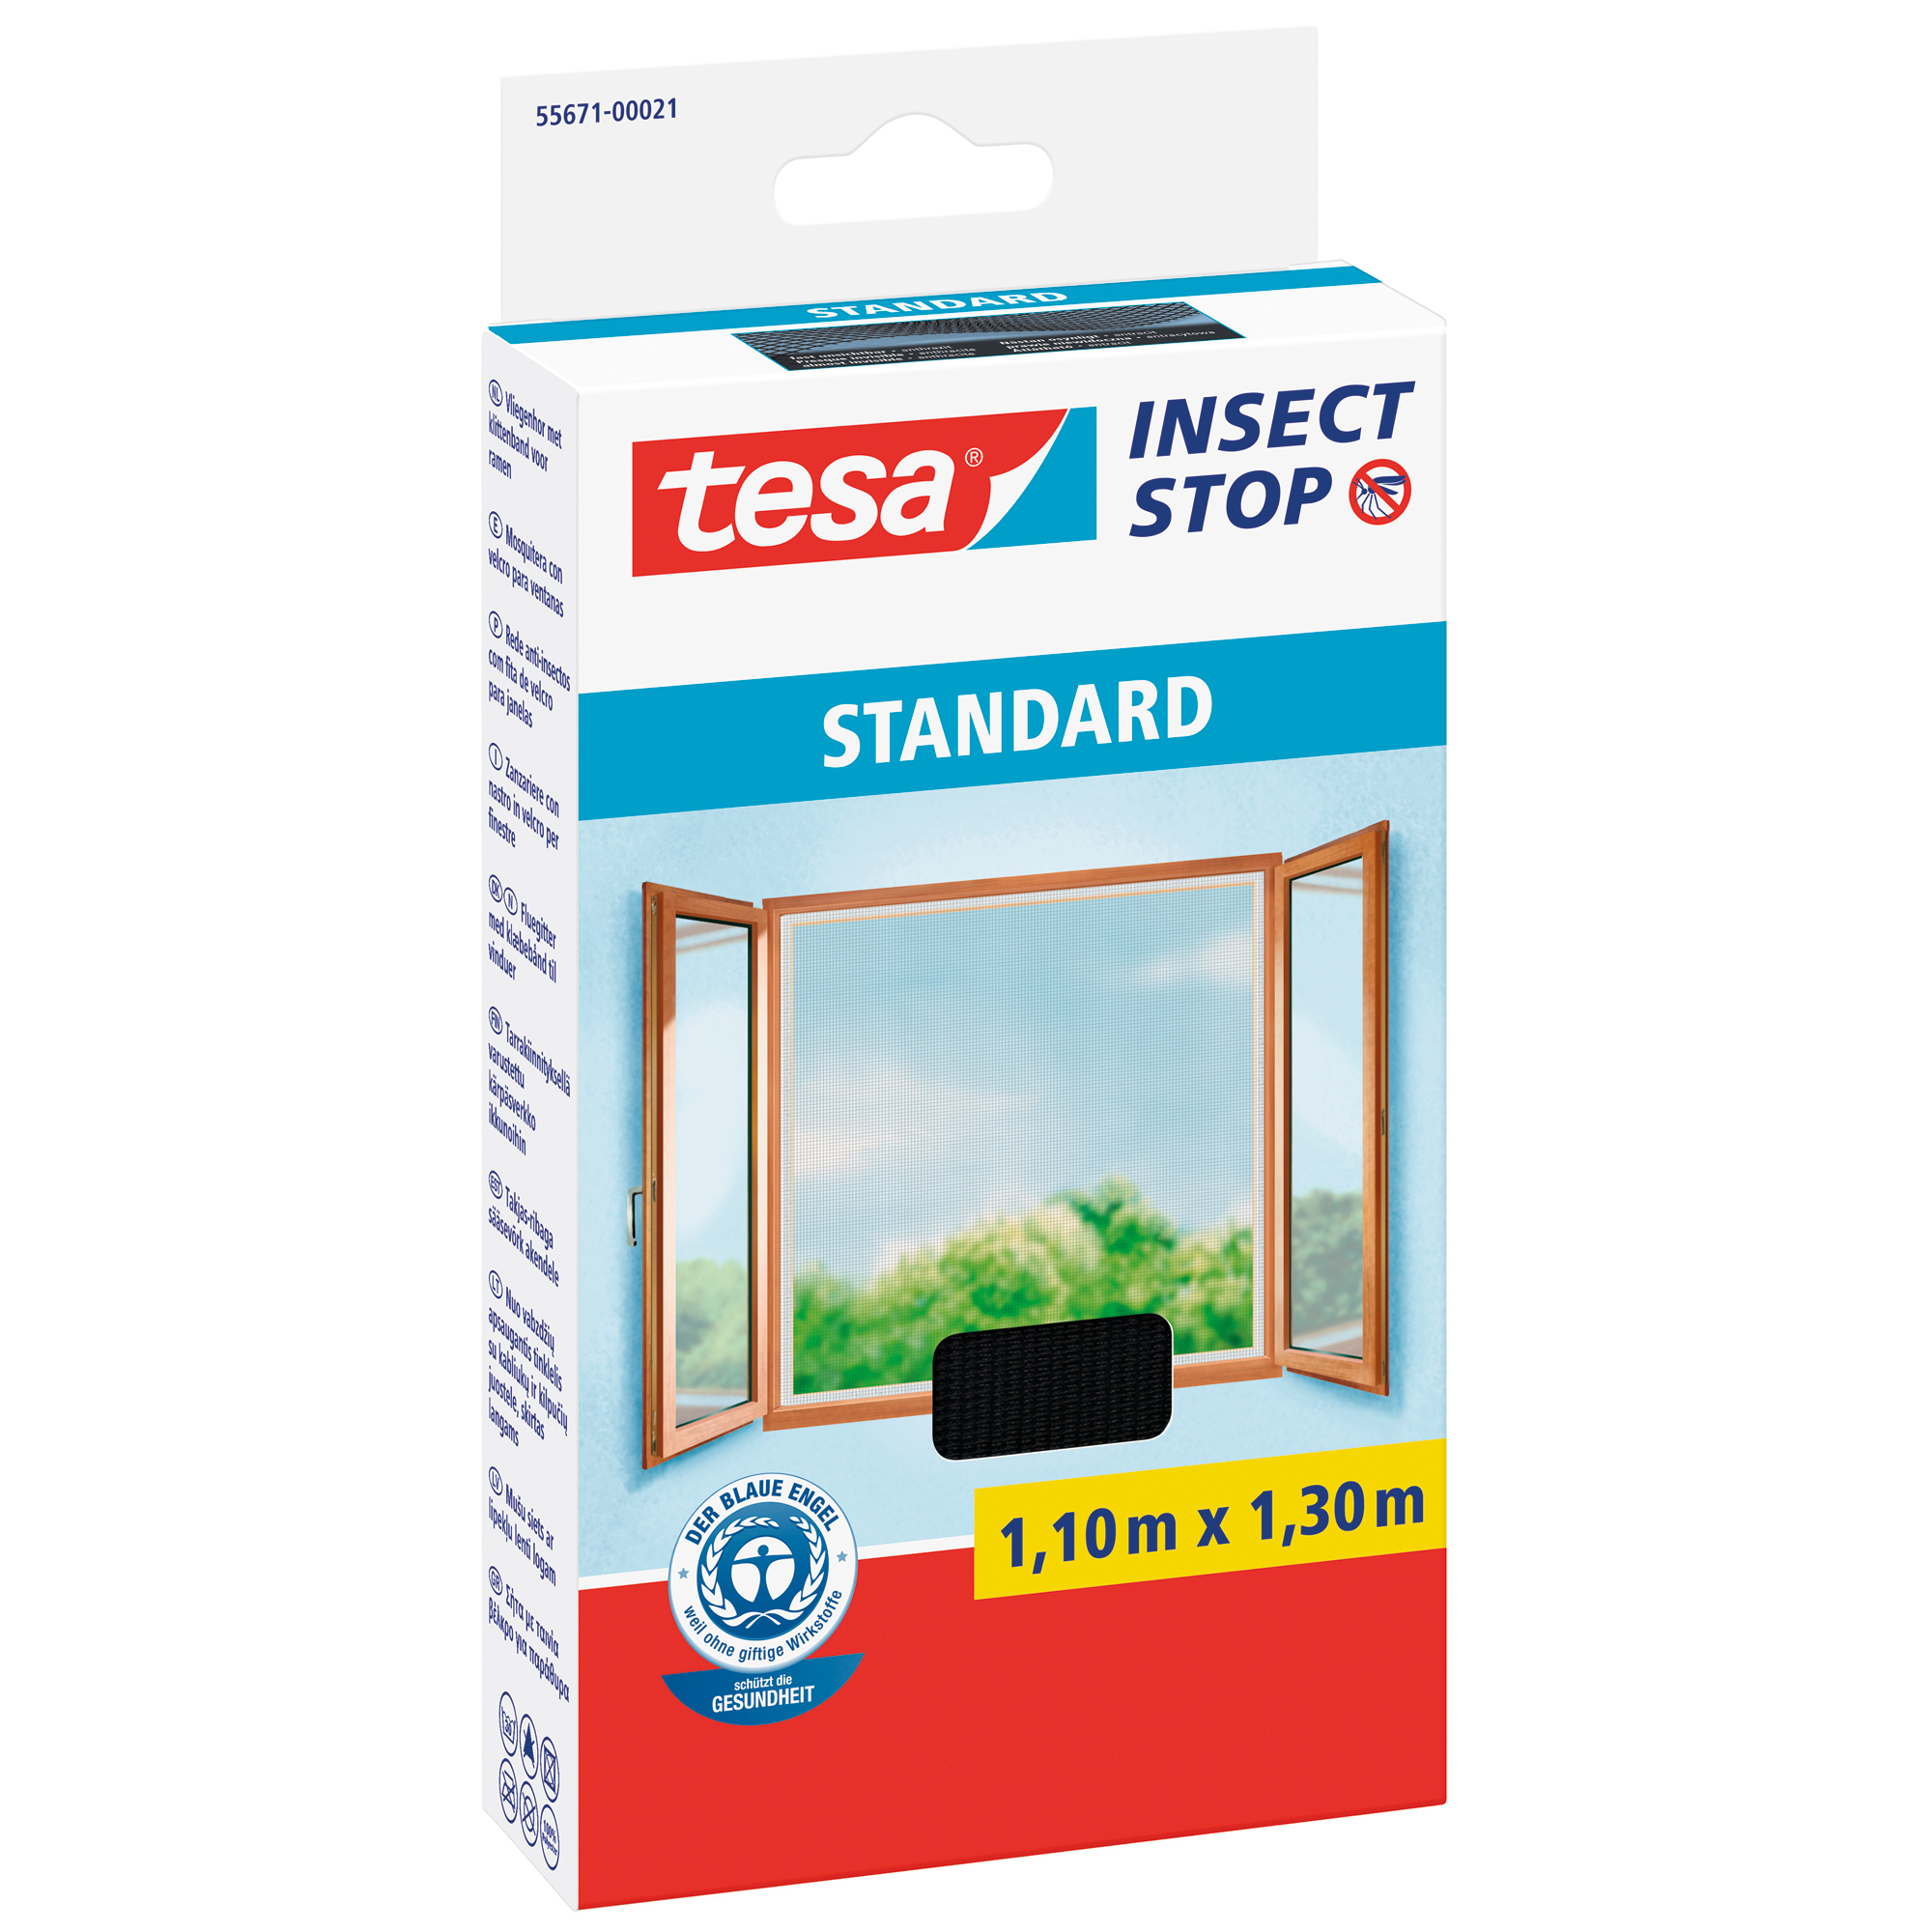 tesa® Fliegengitter Insect Stop STANDARD 110 x 130 cm anthrazit